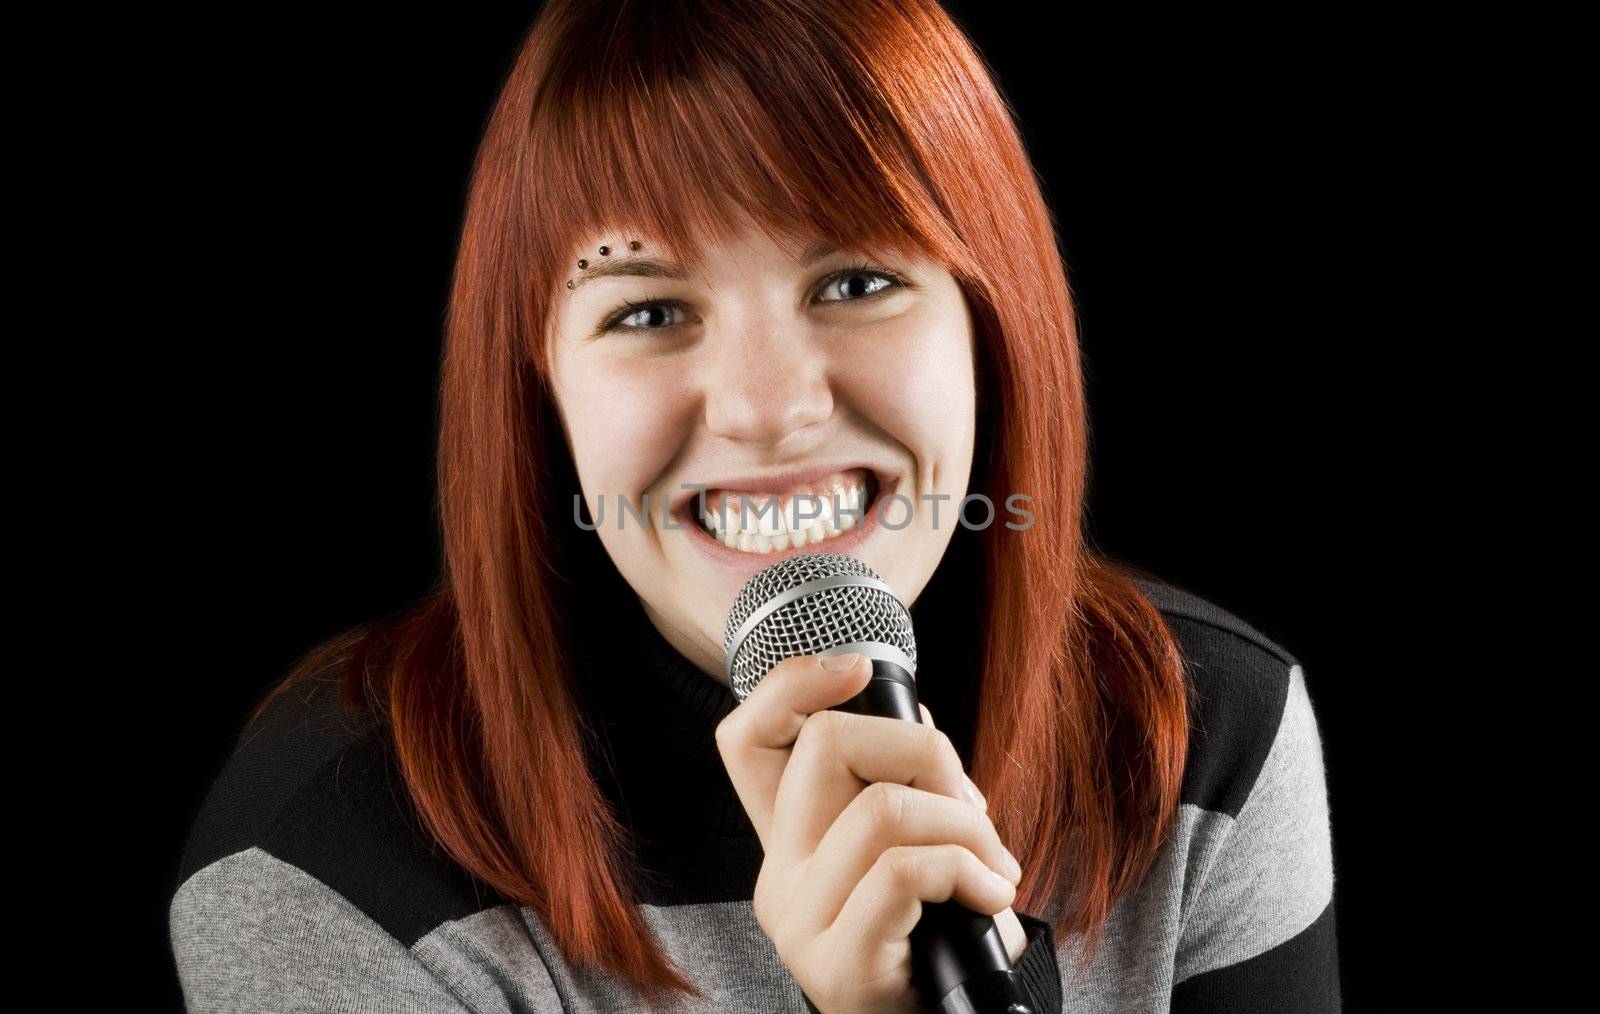 Joyful girl singing on the karaoke by domencolja